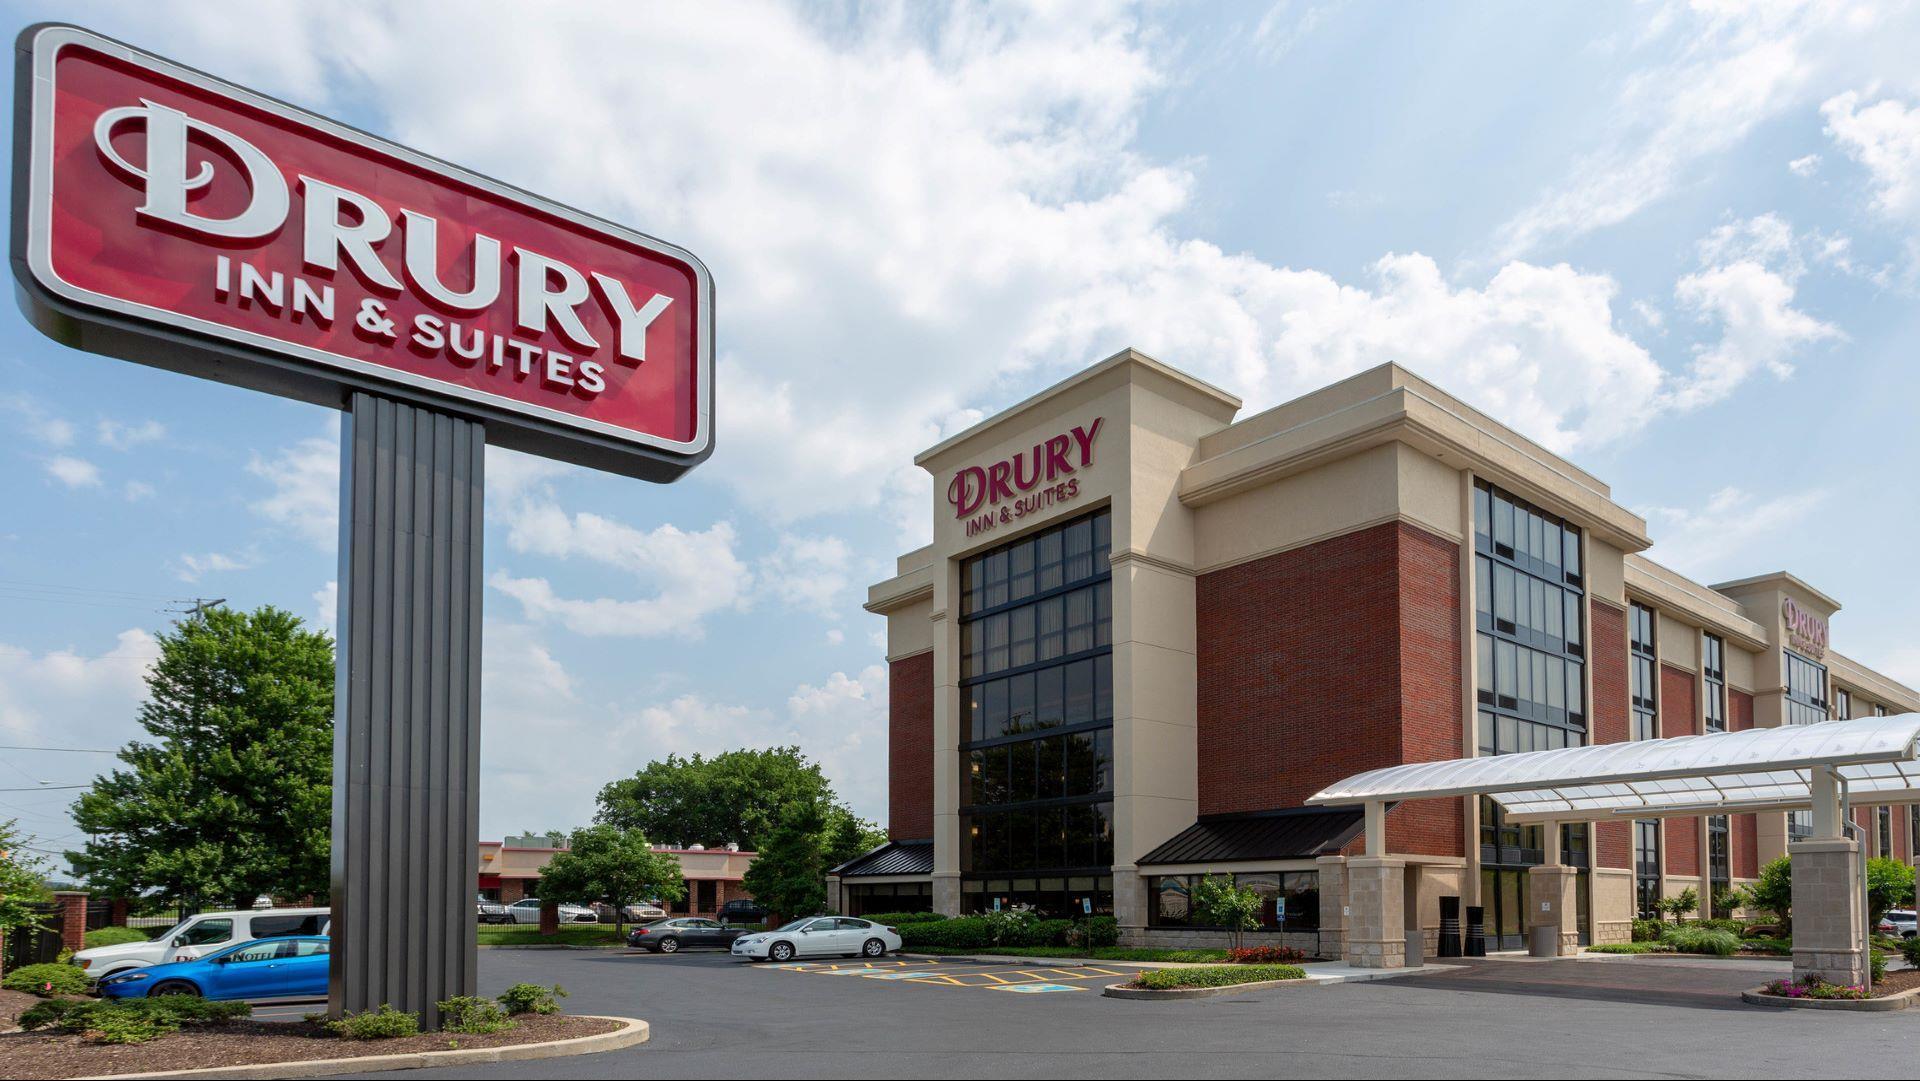 Drury Inn & Suites Nashville Airport in Nashville, TN